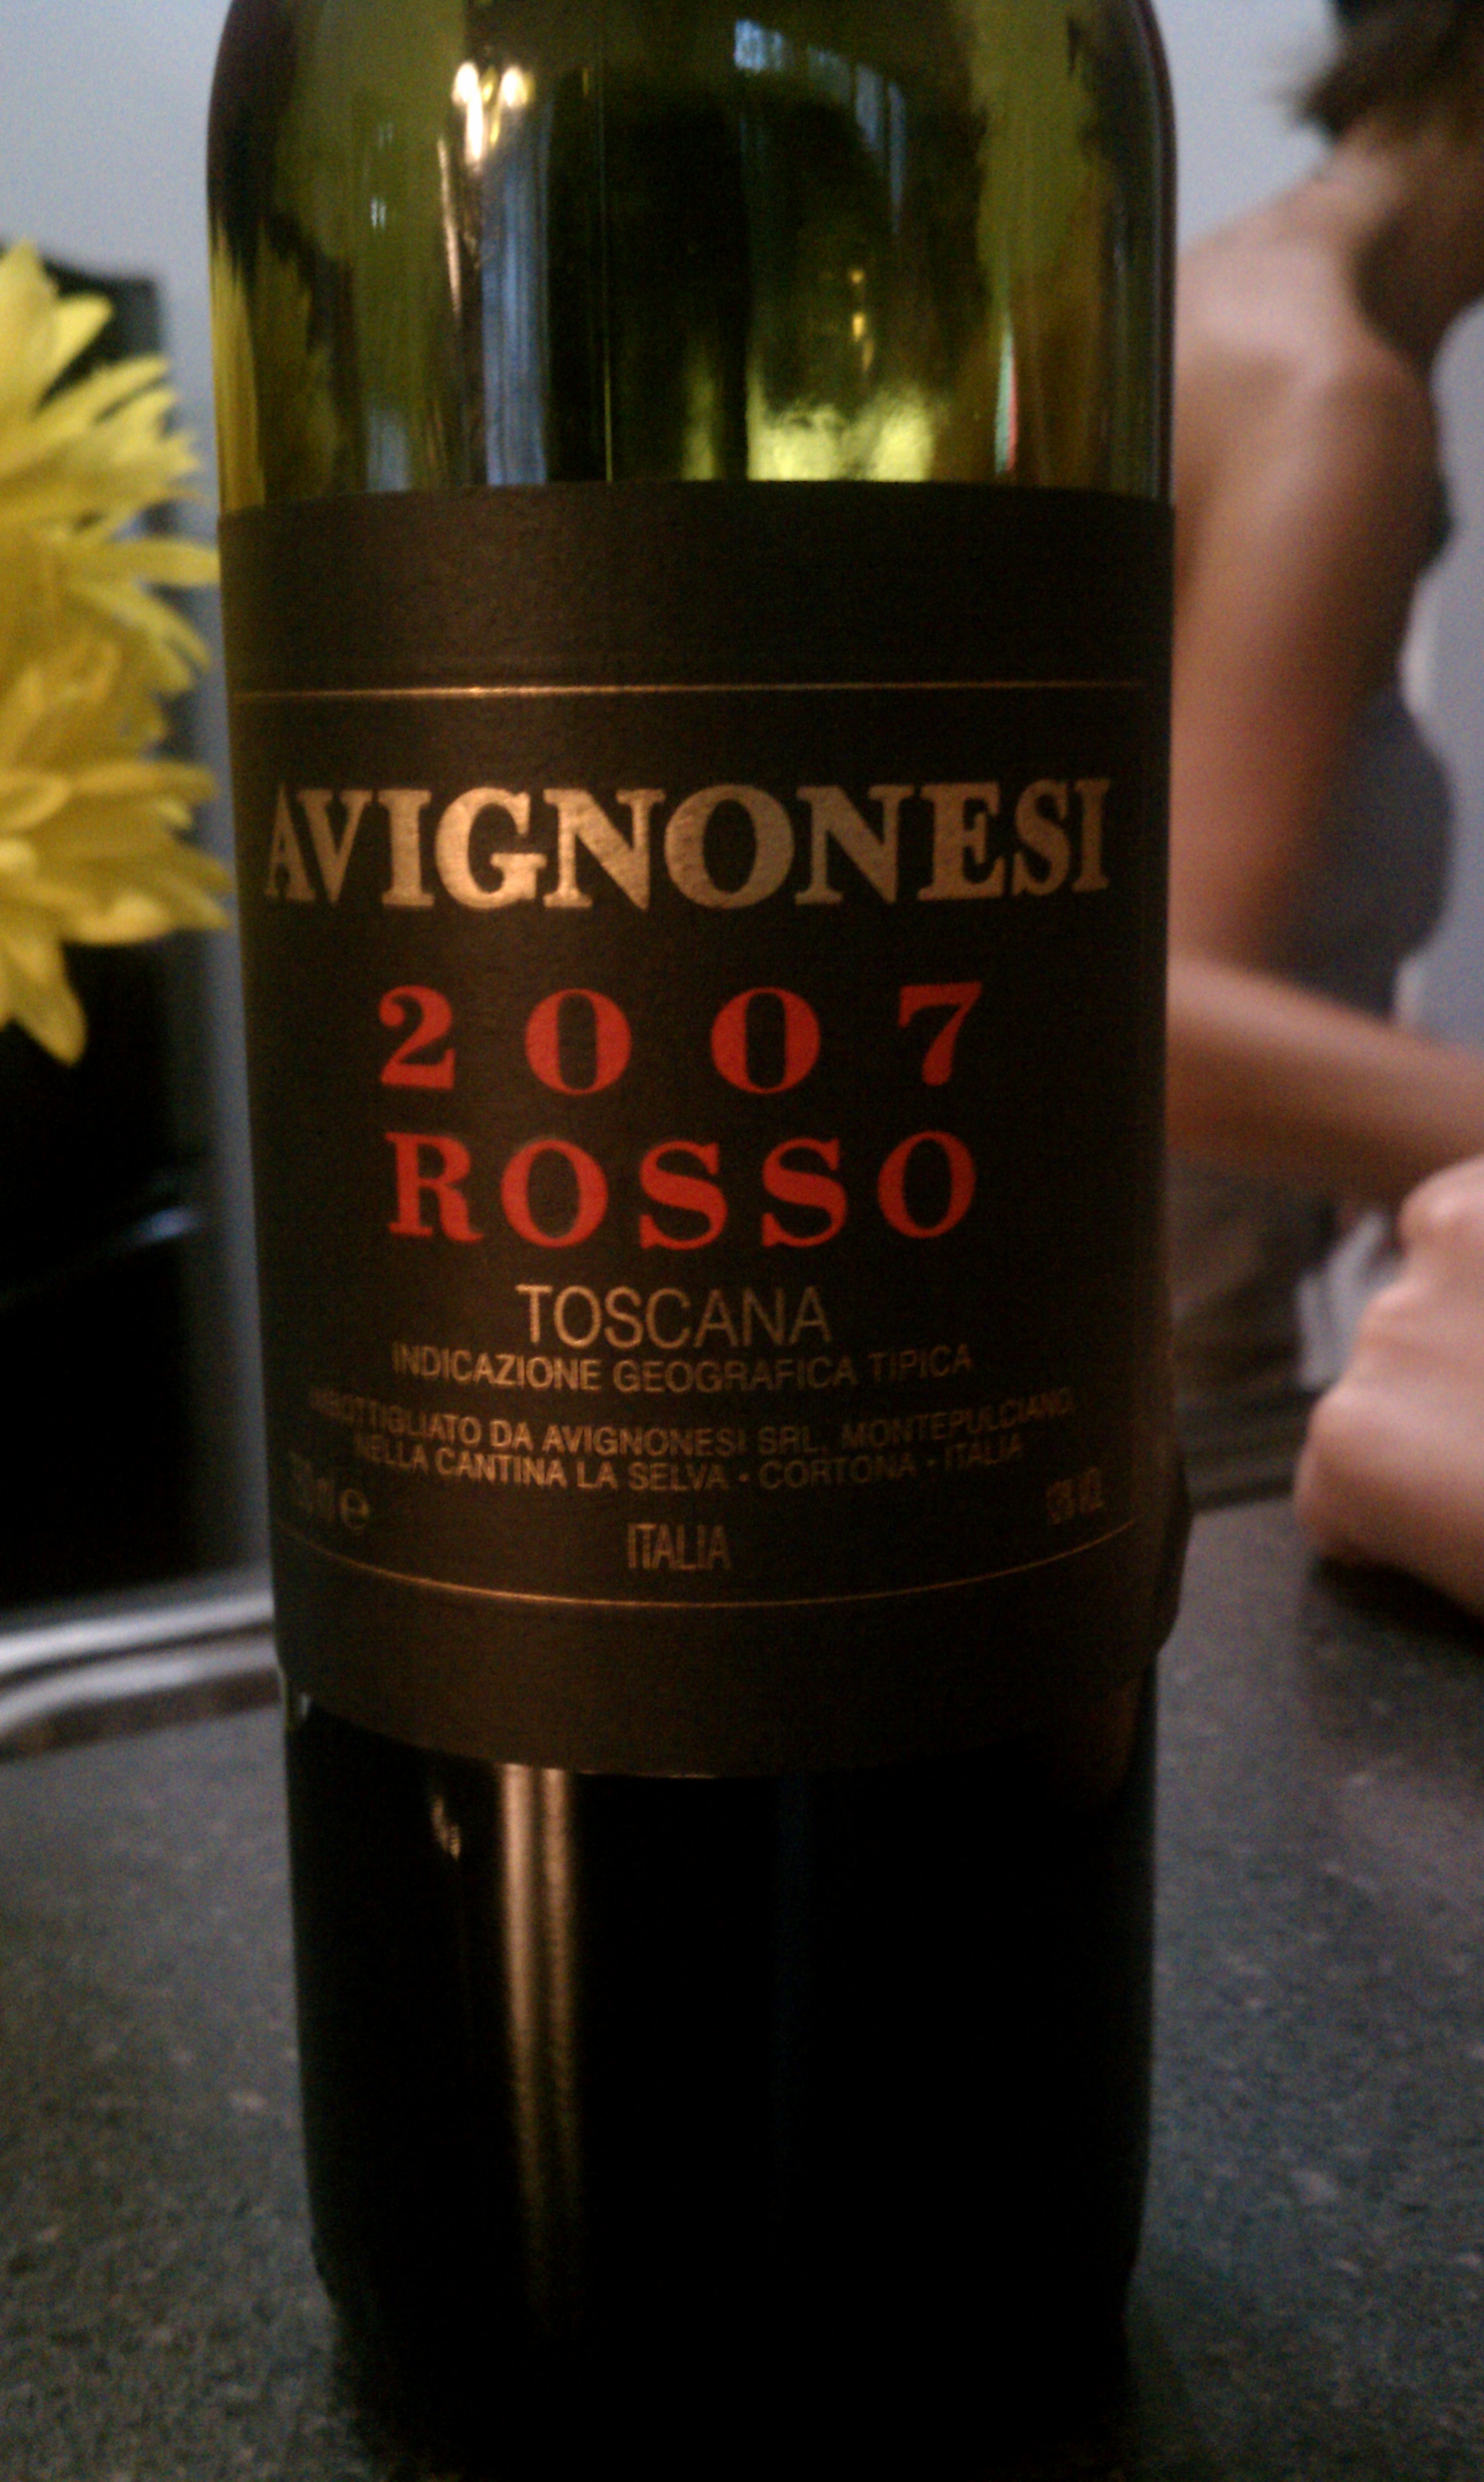 2007 Avignonesi Rosso Toscana